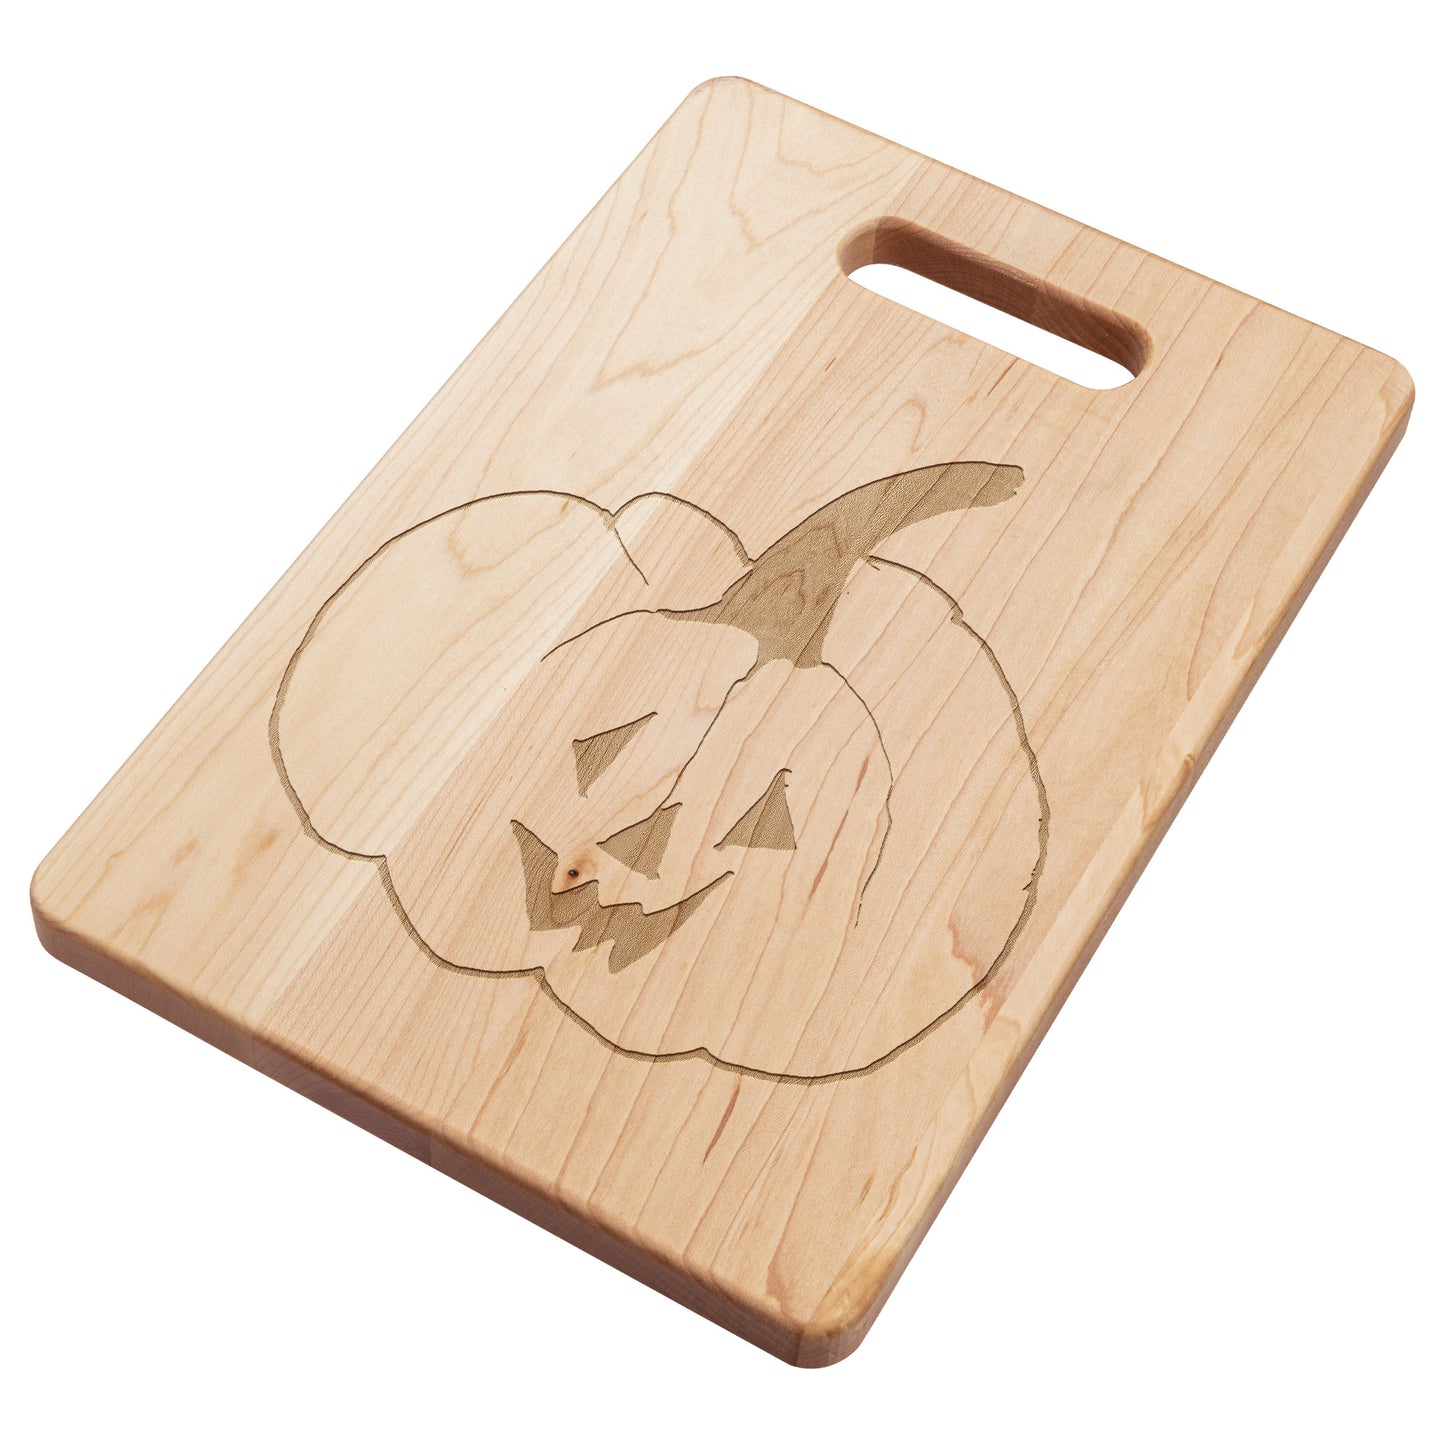 Jack O Lantern Maple Cutting Board